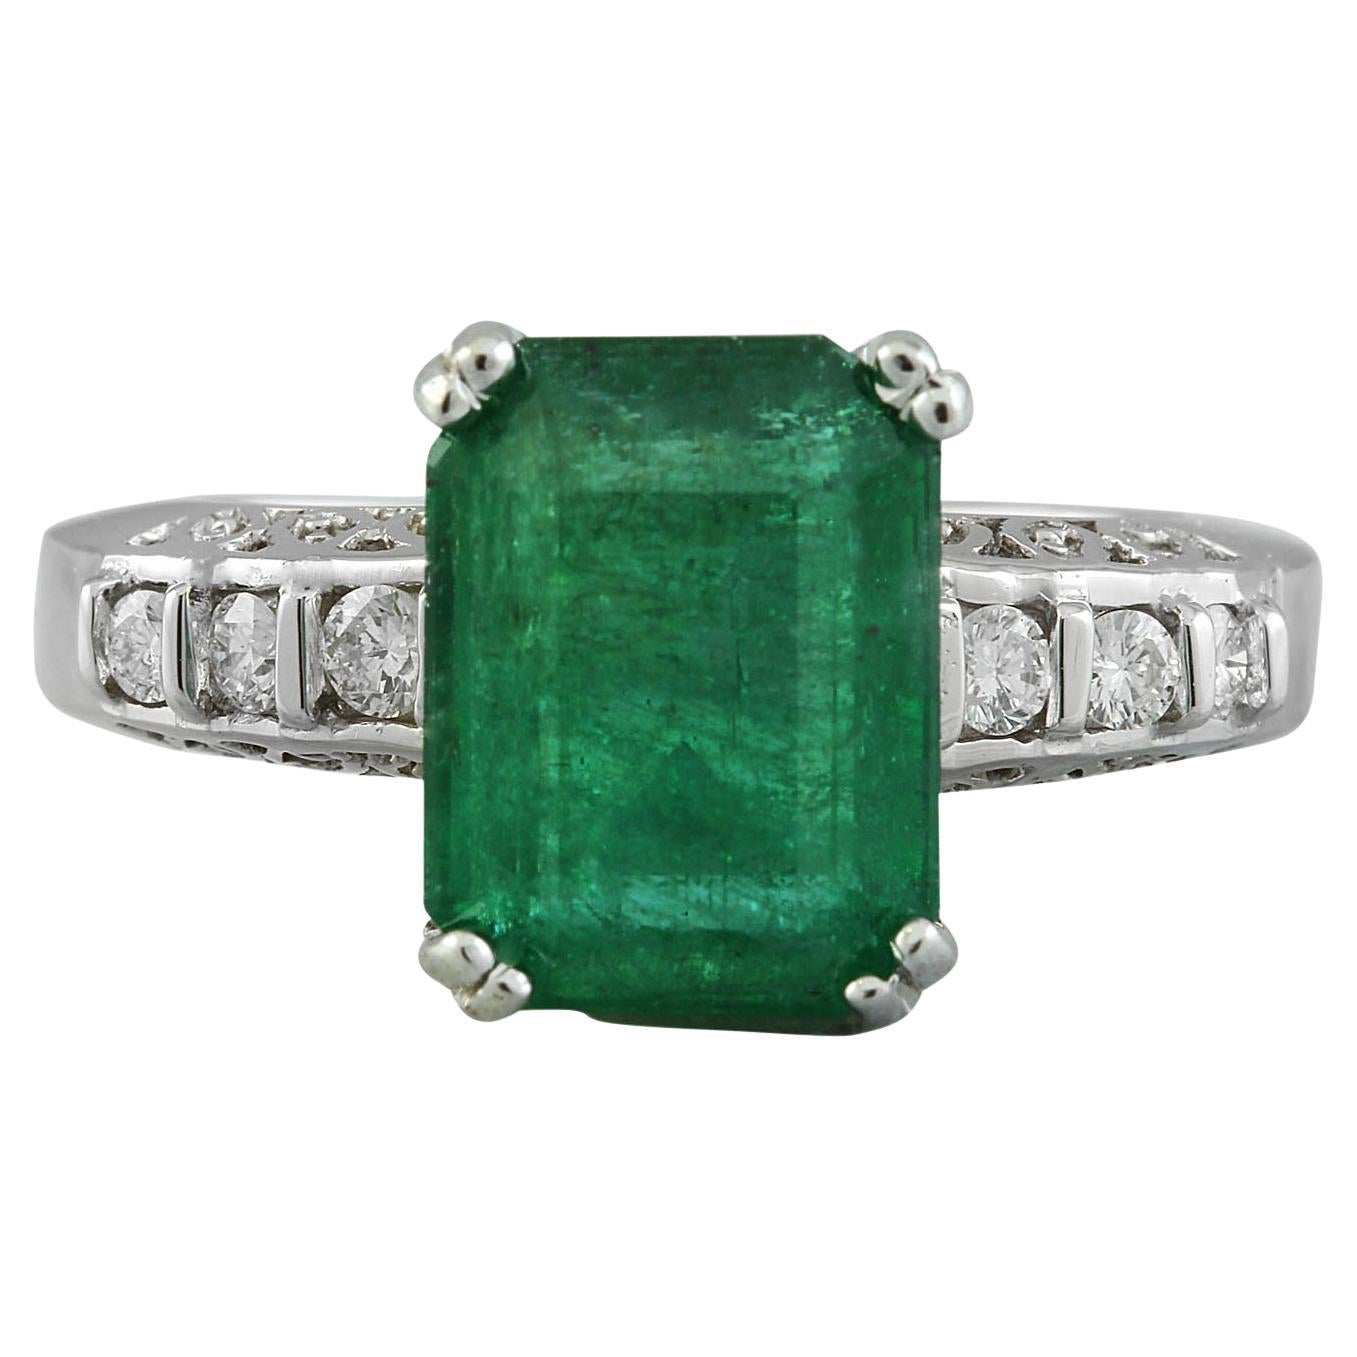 3.72 Carat Natural Emerald 14 Karat Solid White Gold Diamond Ring (bague en or blanc massif avec diamants)